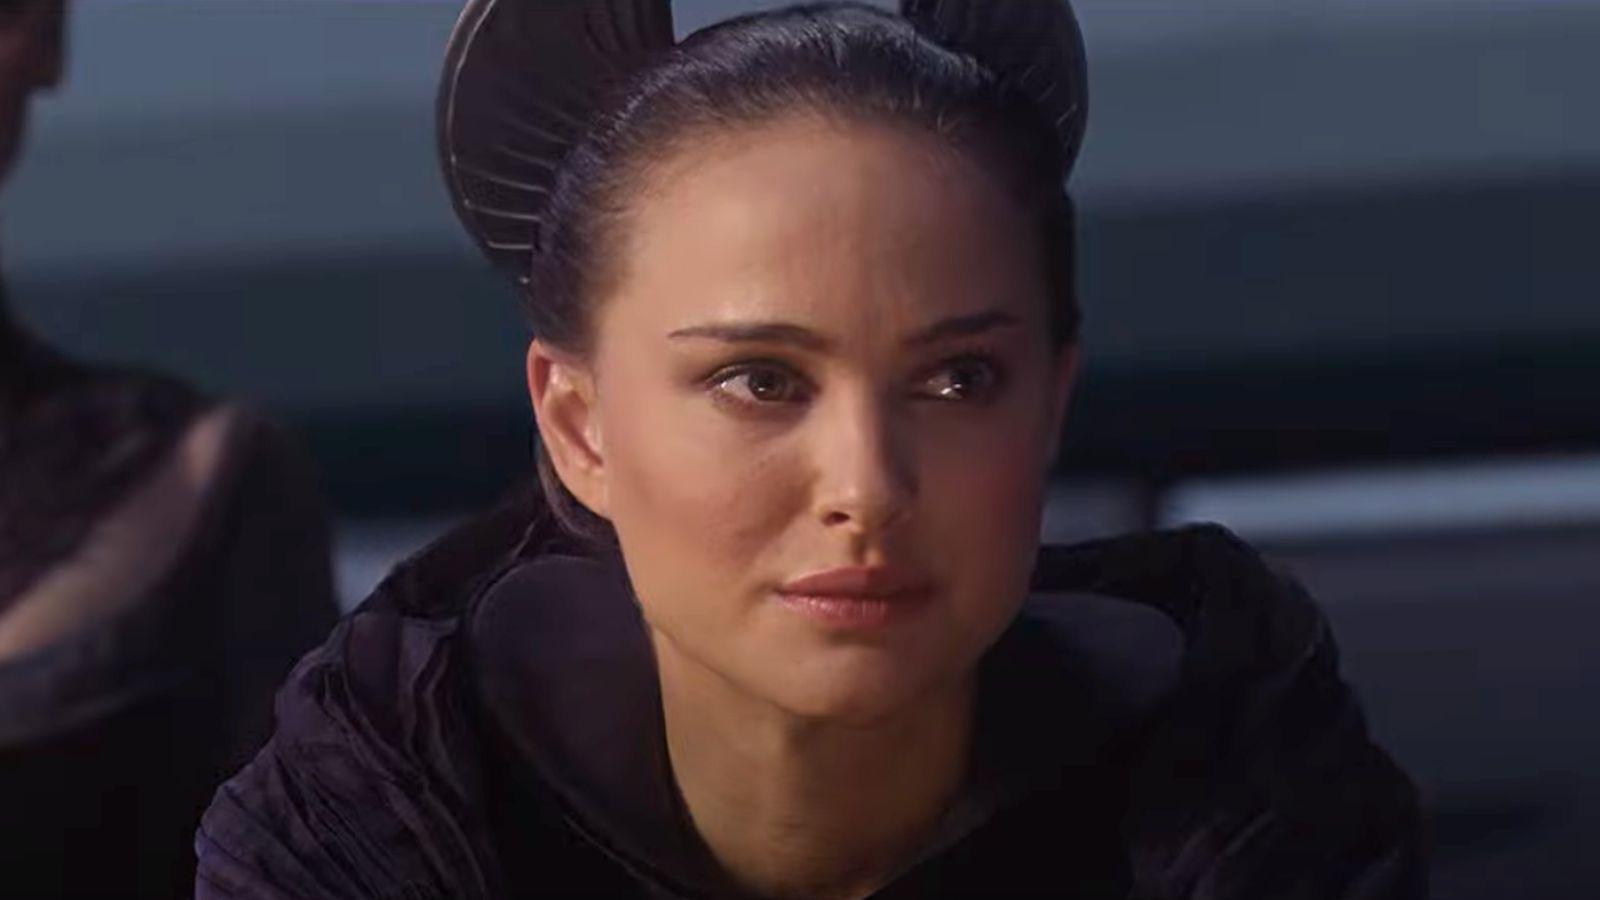 Natalie Portman as Padme Amidala in Revenge of the Sith.